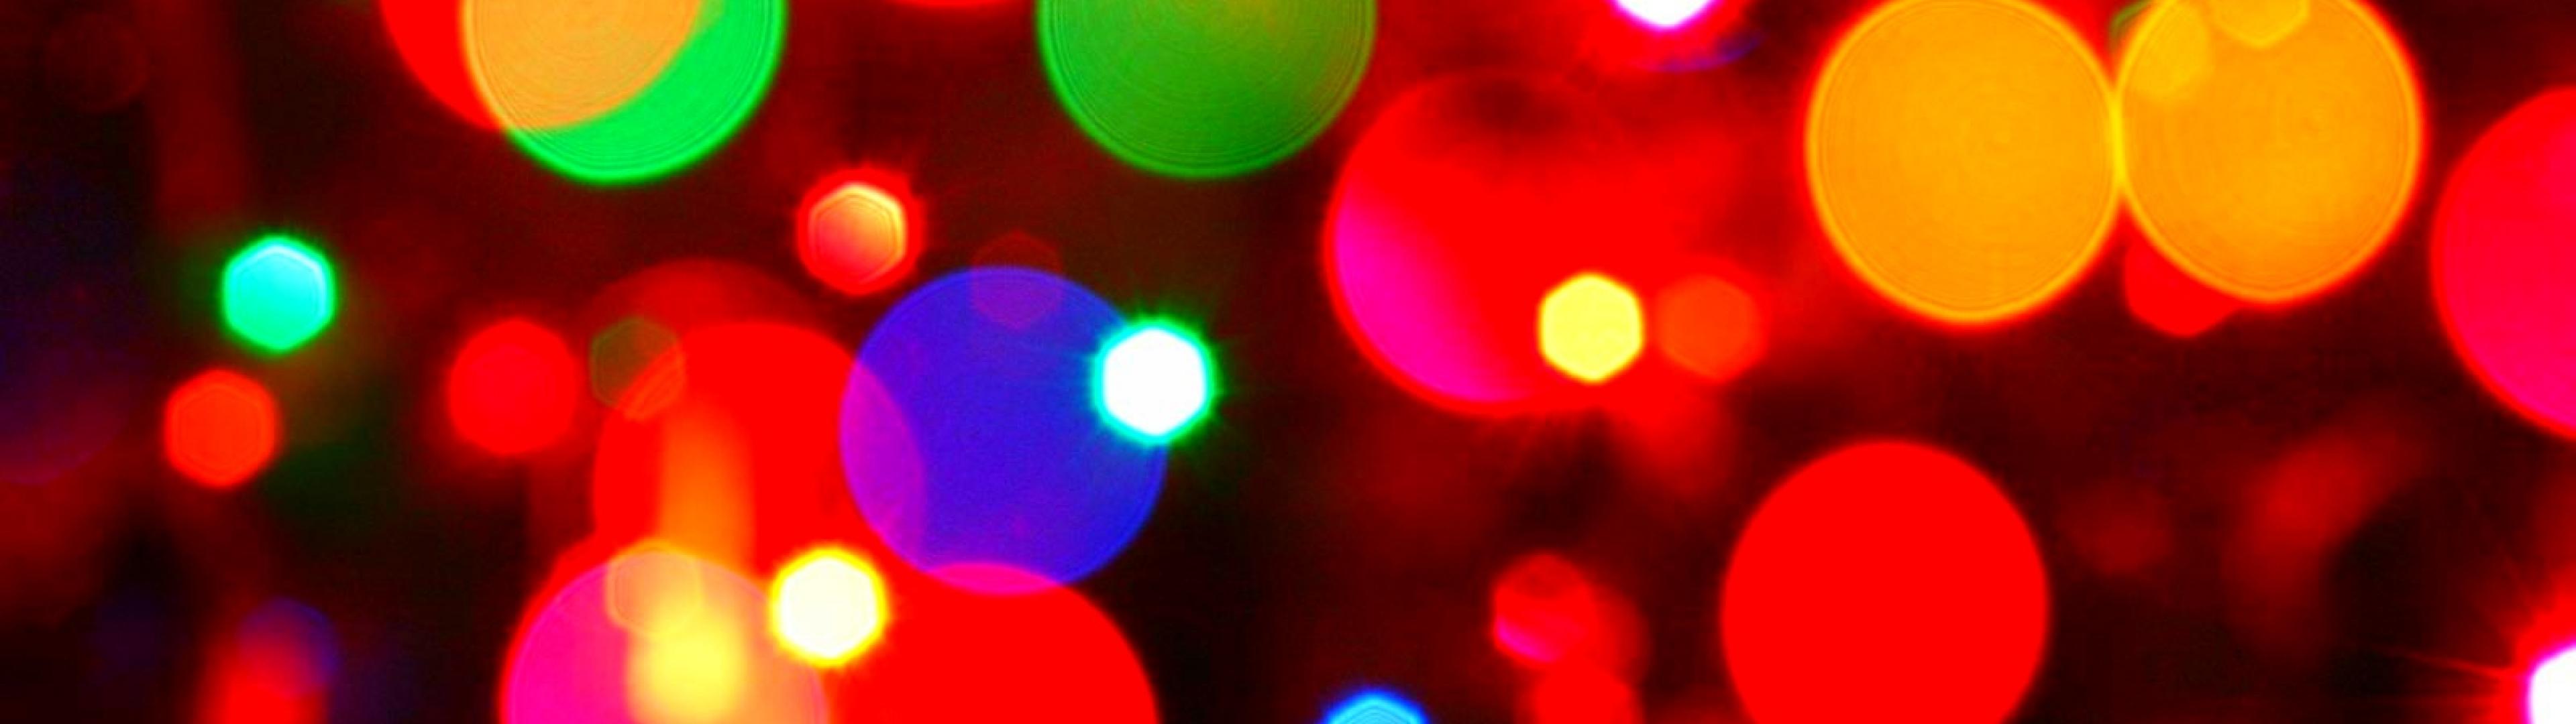 Lights Christmas Bokeh HD Wallpaper New Year